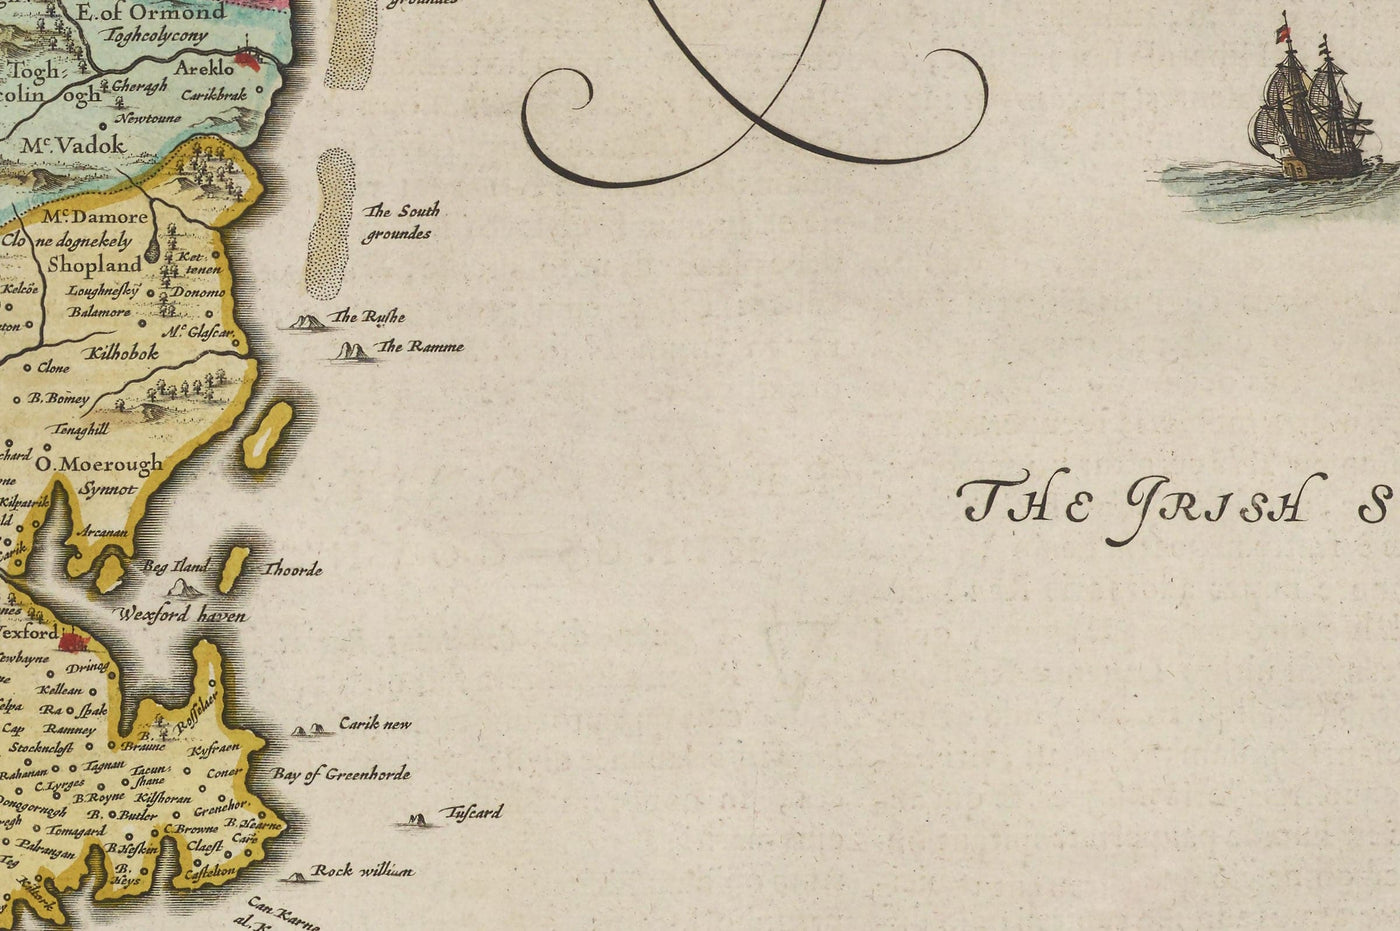 Ancienne Carte de Leinster, Irlande en 1665 par Joan Blaaueu - County Dublin, Kilkenny, Meath, Drogheda Swords, Waterford, East Eire